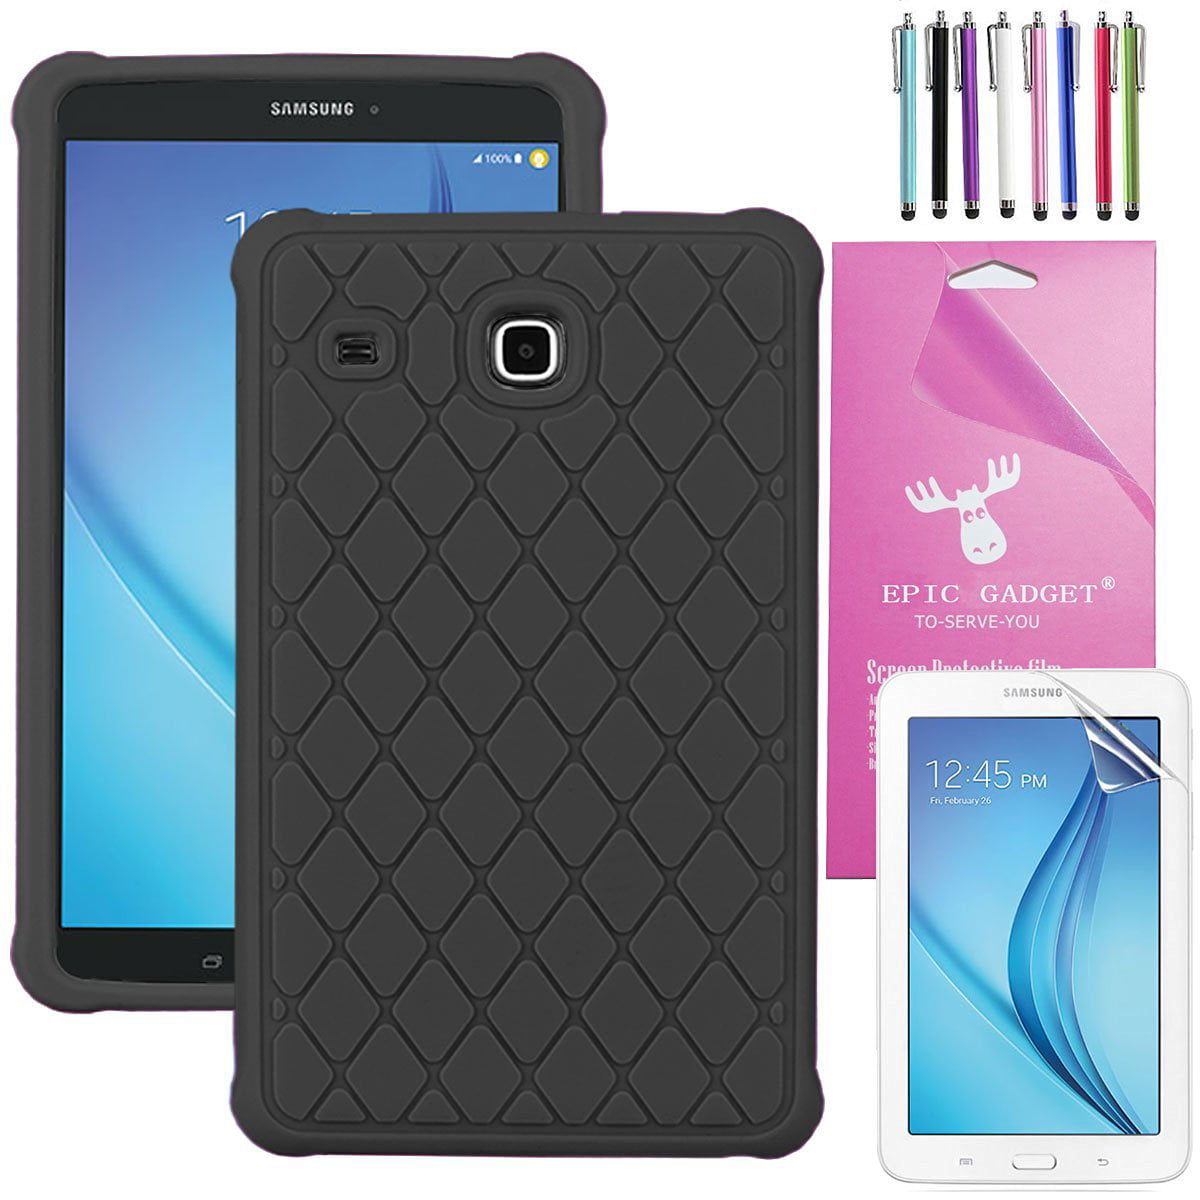 protección TPU cover para Samsung Galaxy Tab a 10.1 SM t580 t585 silicona funda protectora tipo bumper 